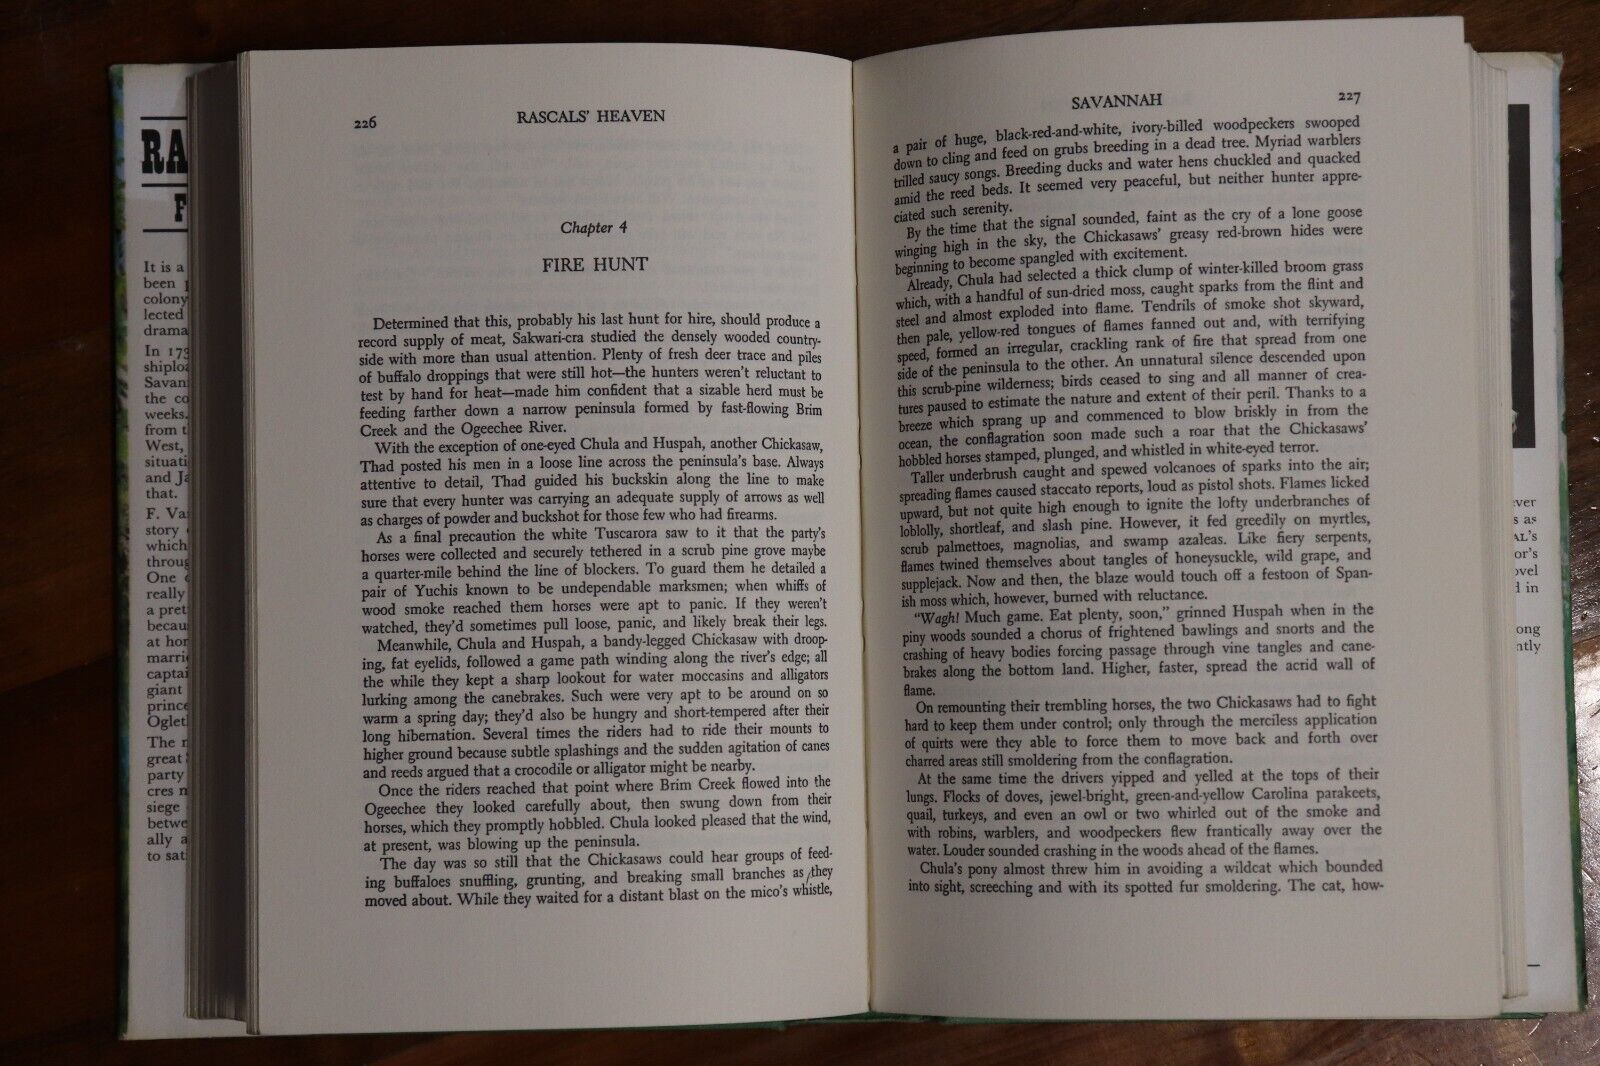 Rascals' Heaven by F Van Wyck Mason - 1965 - 1st Edition Literature Book